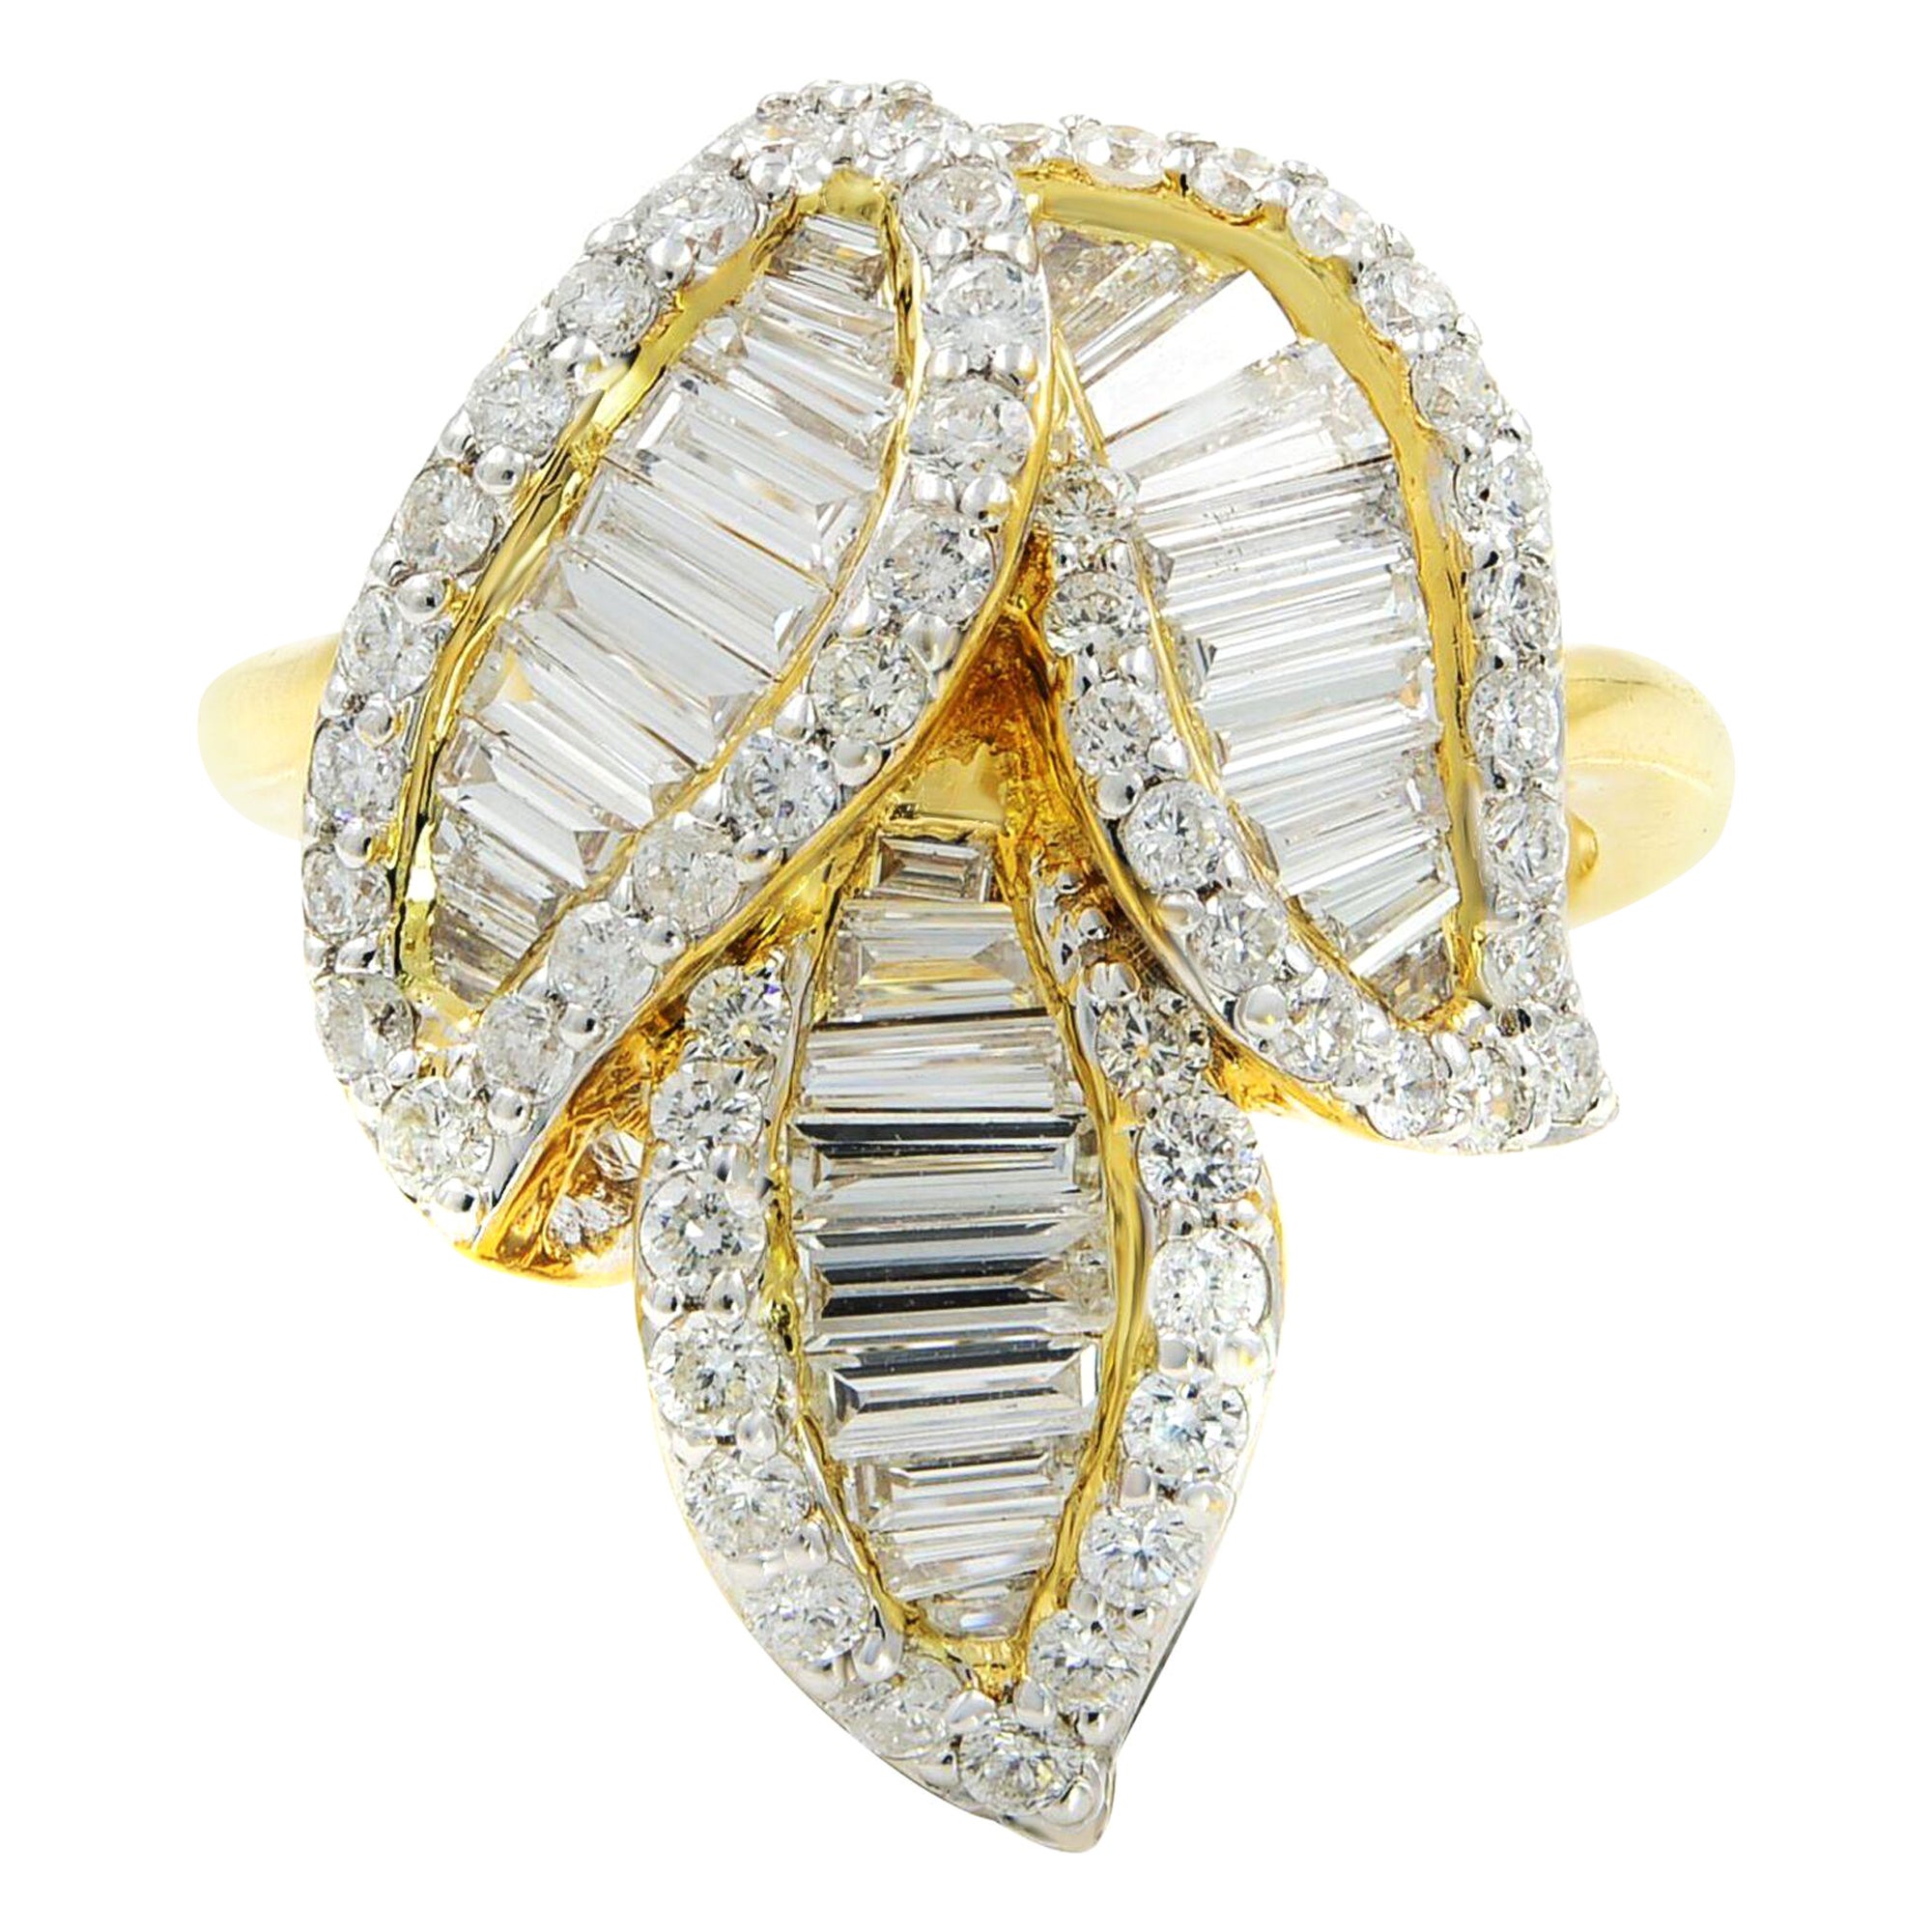 Rachel Koen Round and Baguette Cut Diamond Ring 18K Yellow Gold 1.86Cttw For Sale